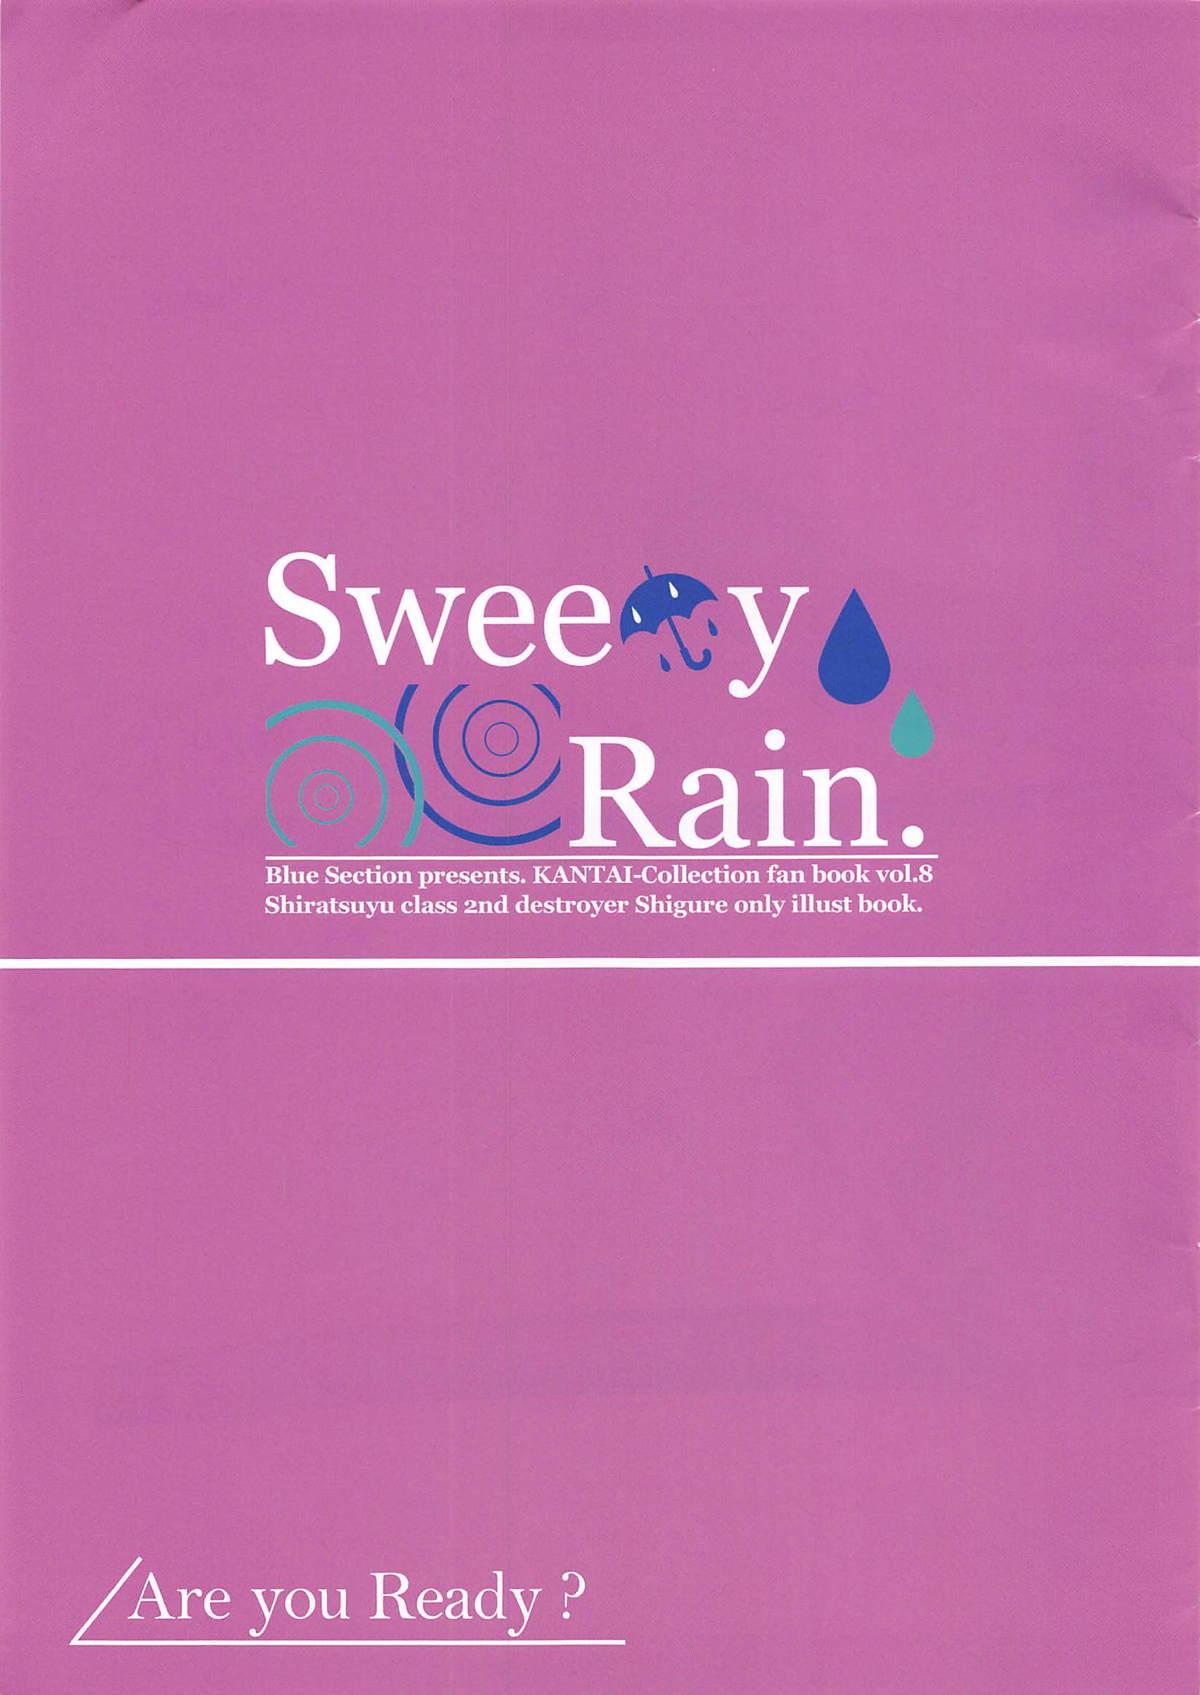 Sweety Rain. 1